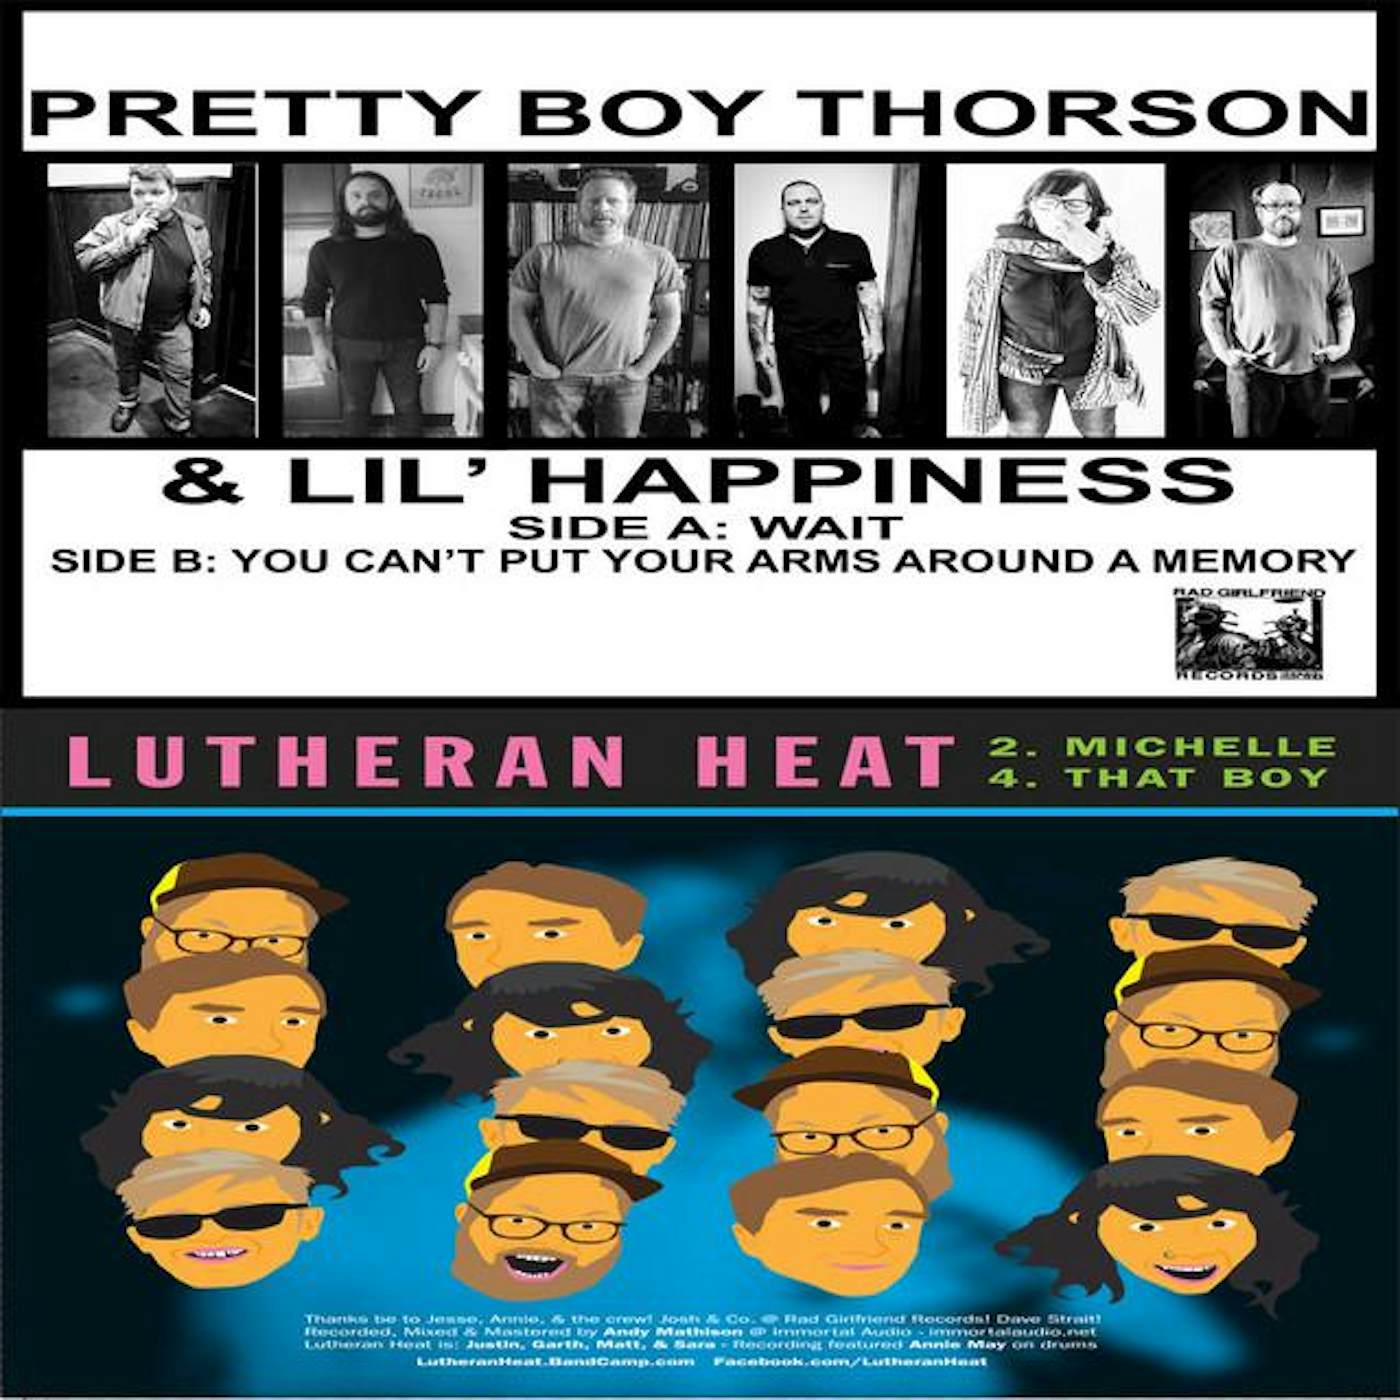 PRETTY BOY THORSON / LUTHERAN HEAT